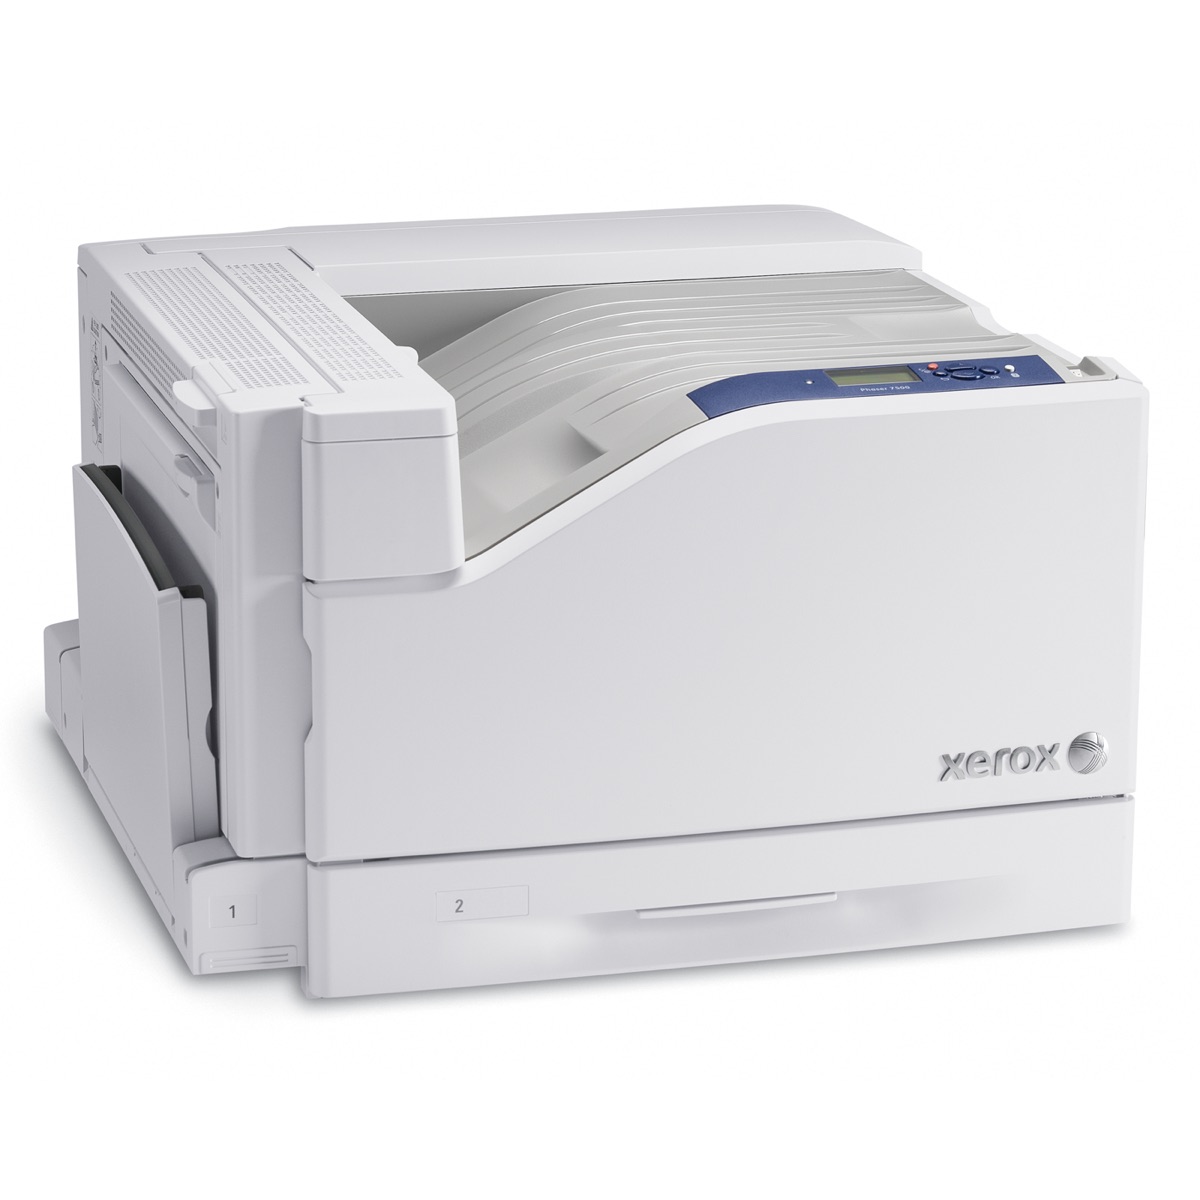 Xerox Printers:  The Xerox Phaser 7500N Printer